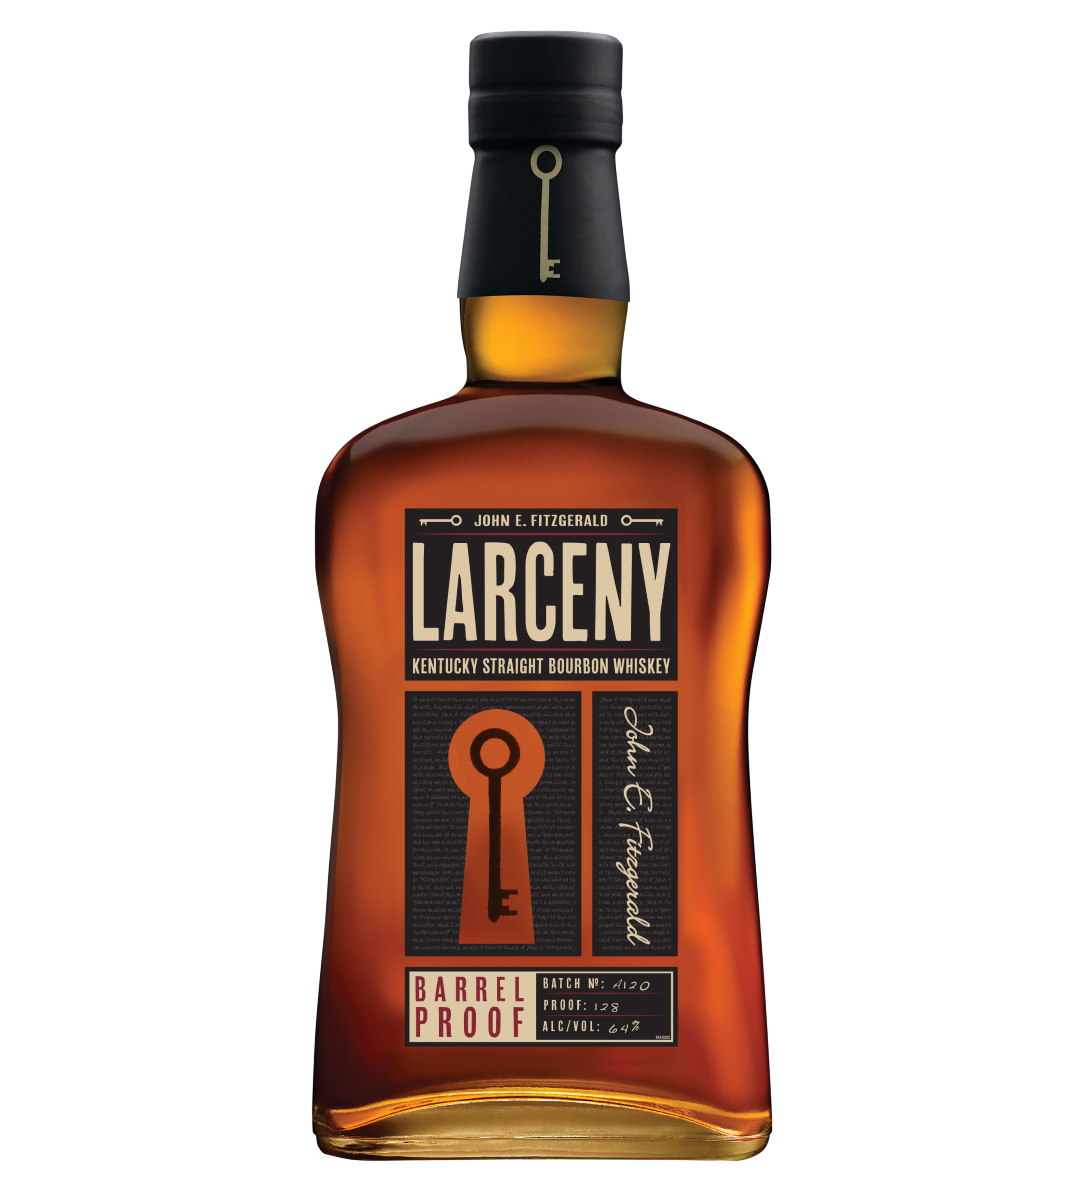 Larceny Barrel Proof Bourbon Batch A120 (January 2020)